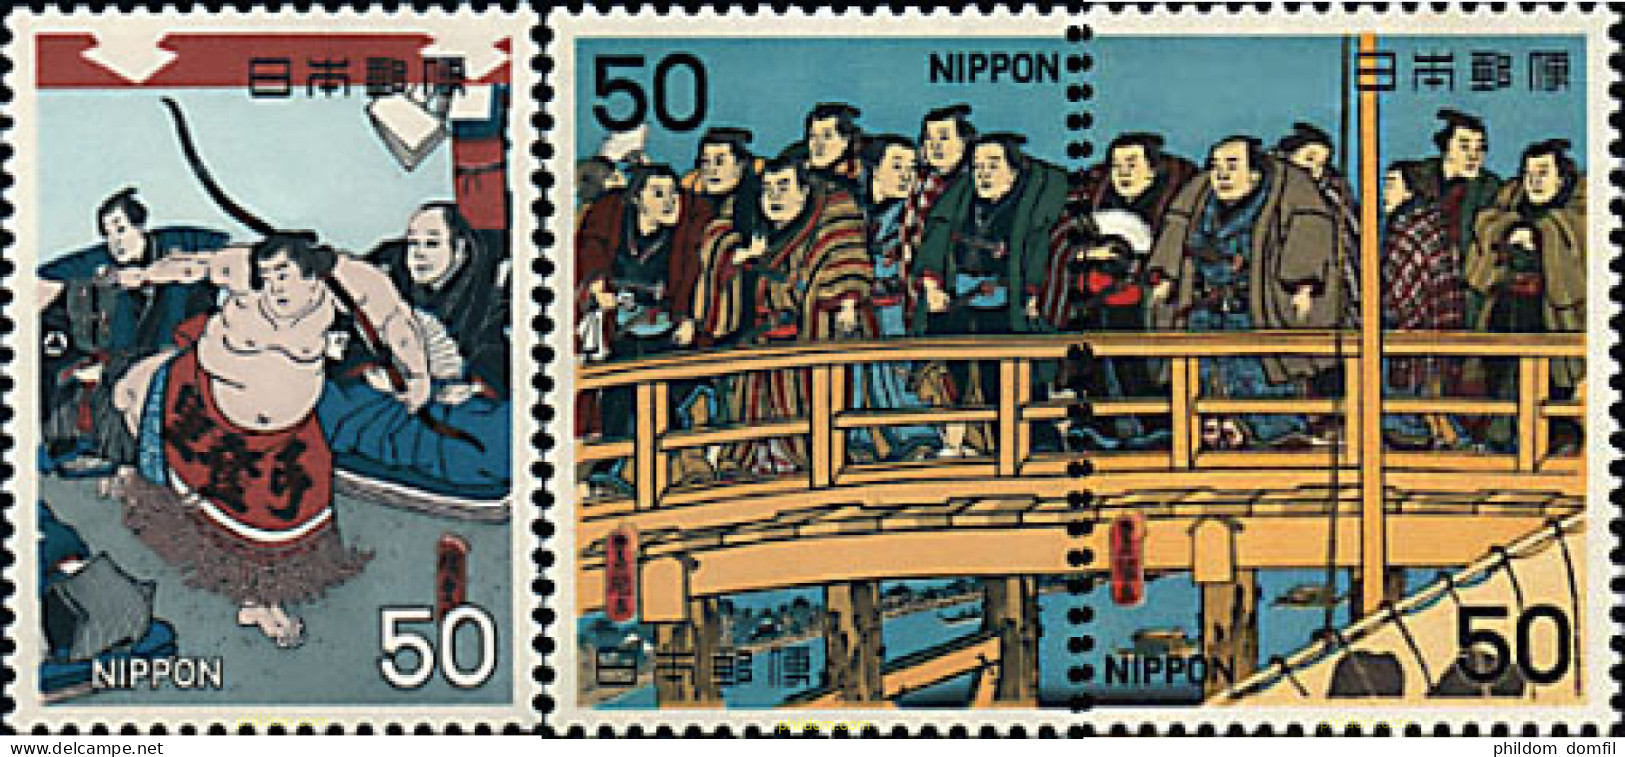 26703 MNH JAPON 1979 DEPORTES NACIONALES - Unused Stamps